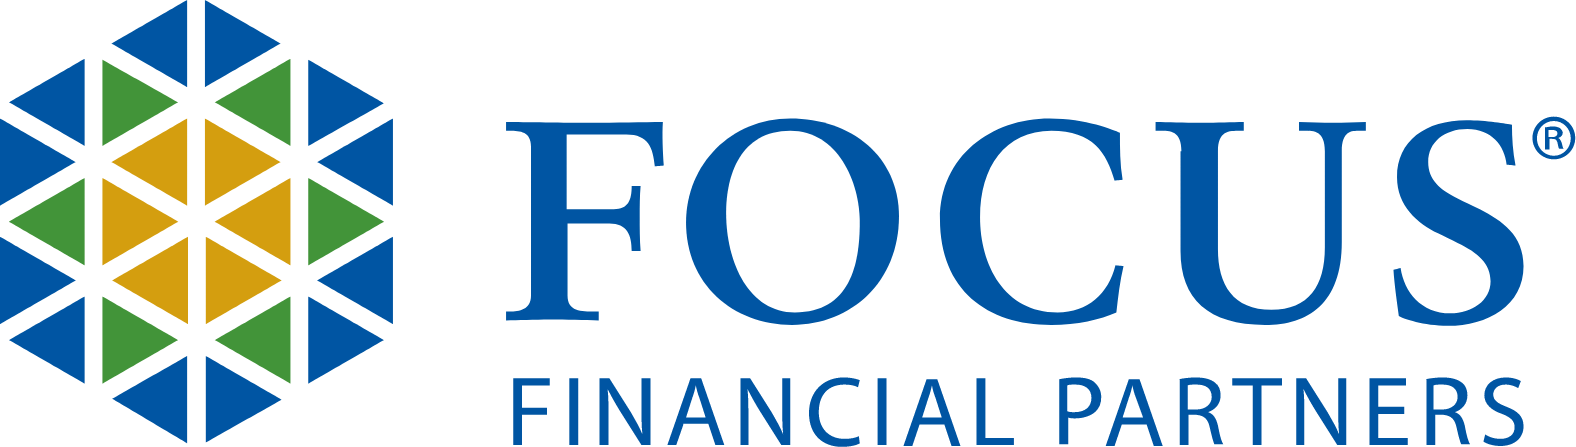 Focus Financial Partners
 logo large (transparent PNG)